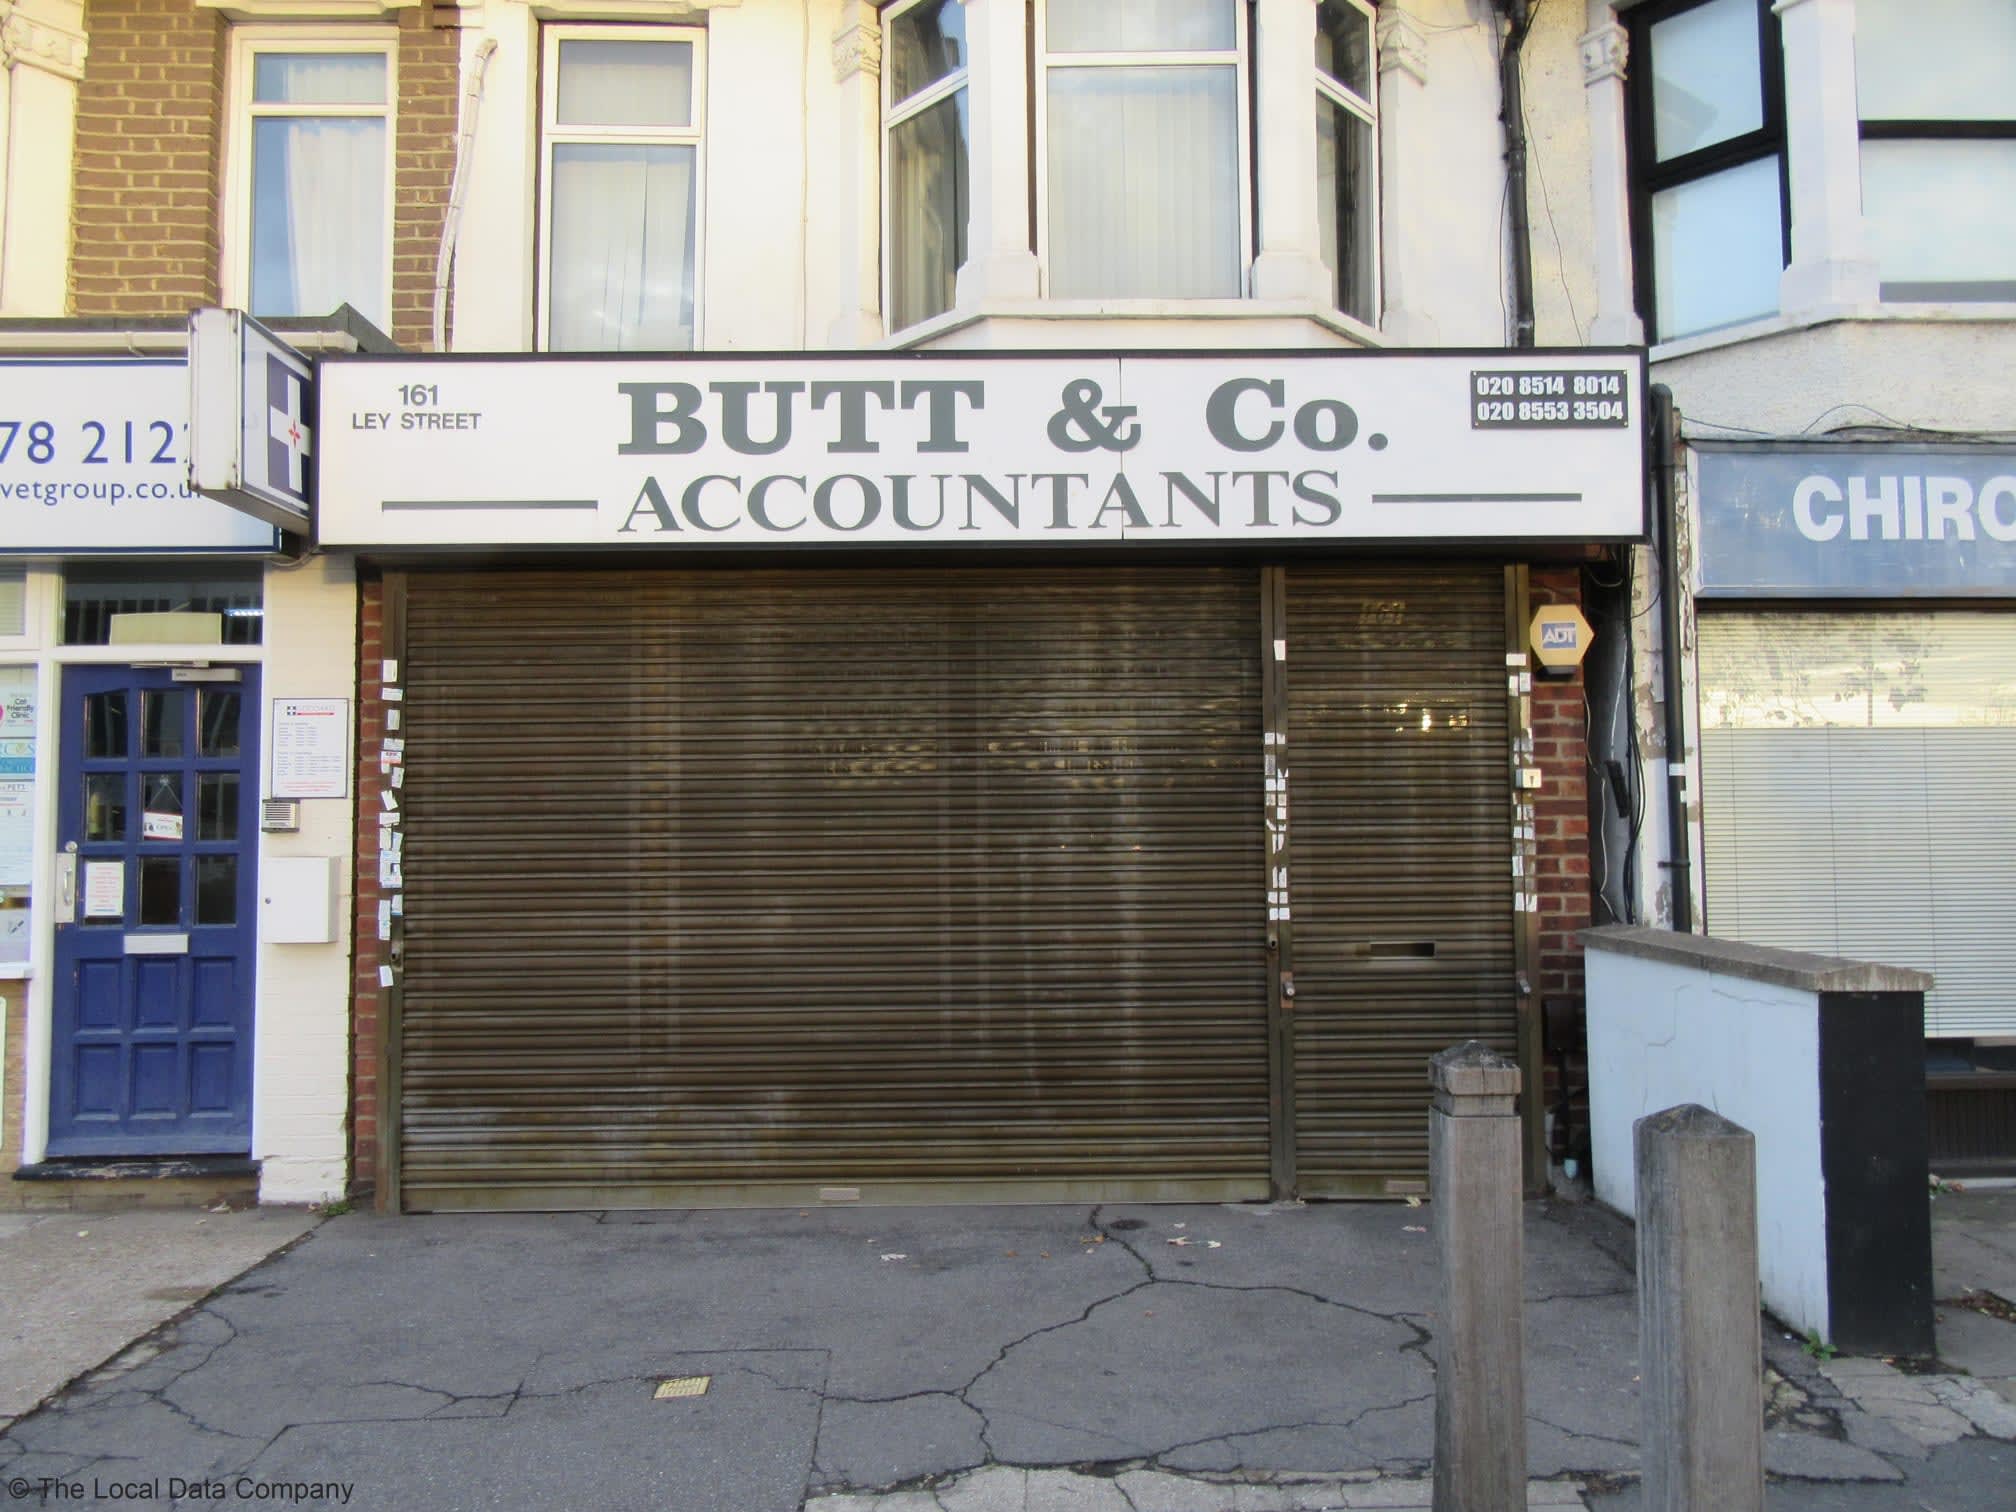 Butt & Co Accountants Ilford 020 8514 8014